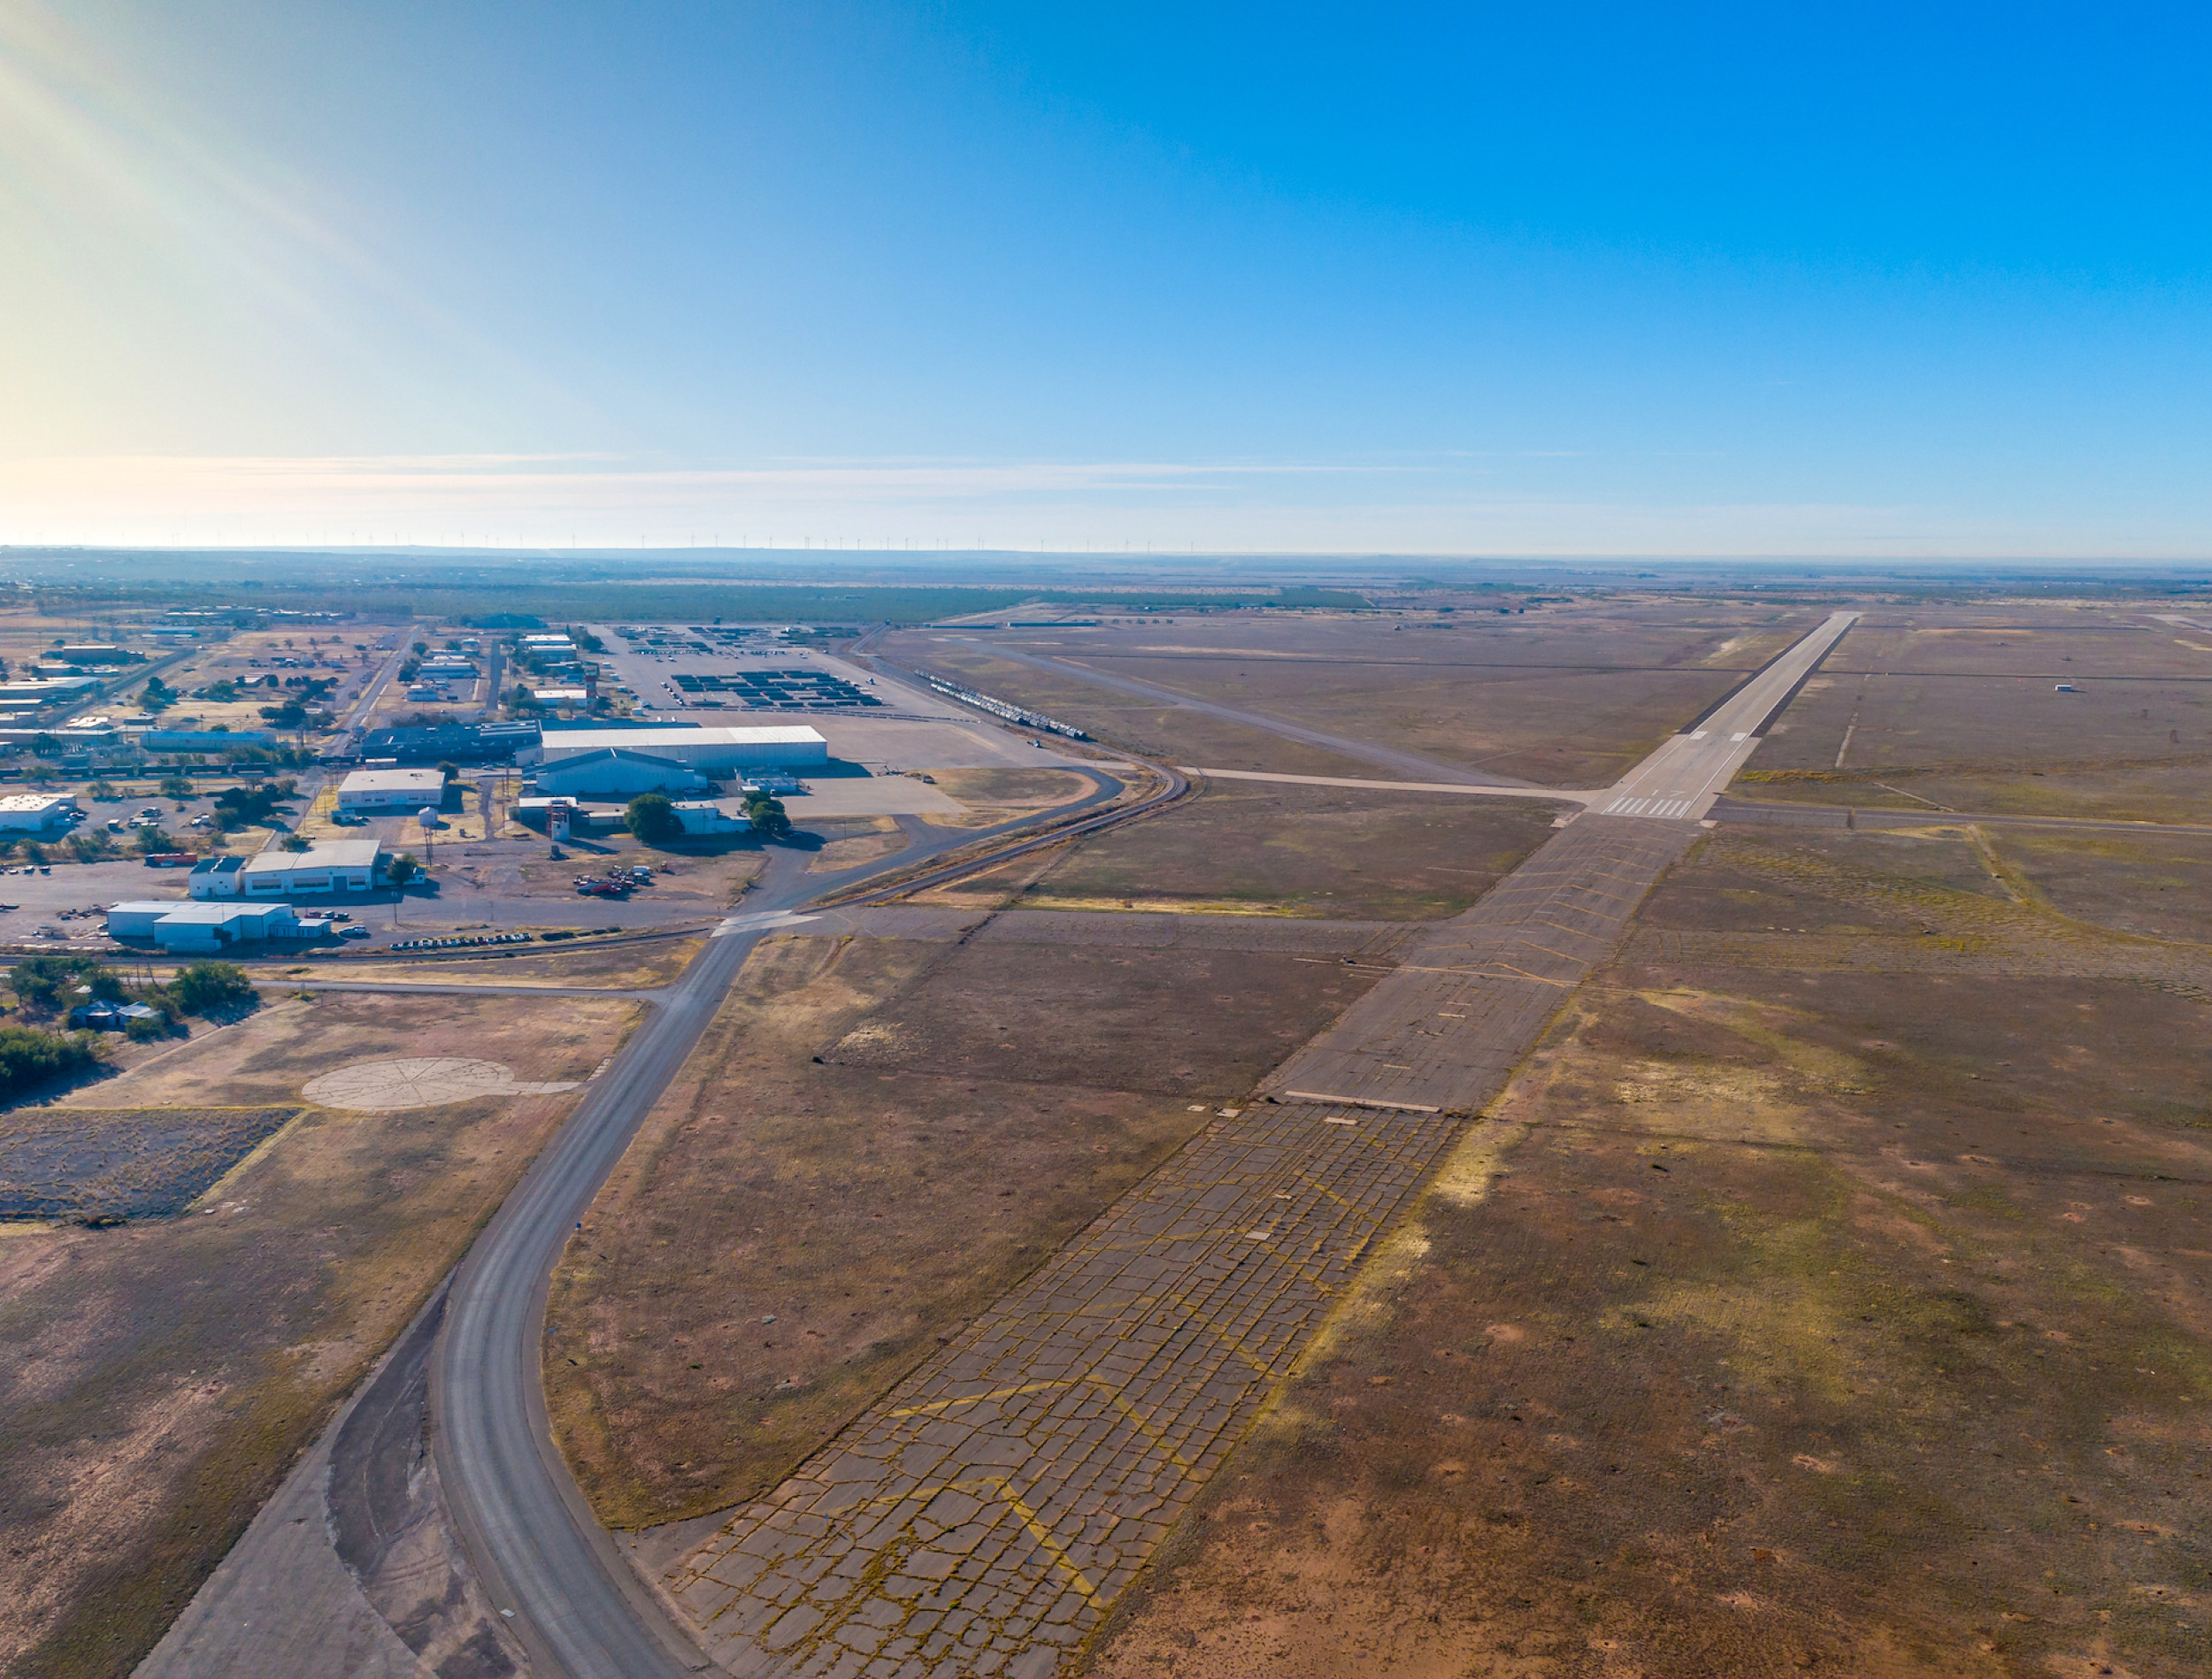 Aerial shot of the airport runway